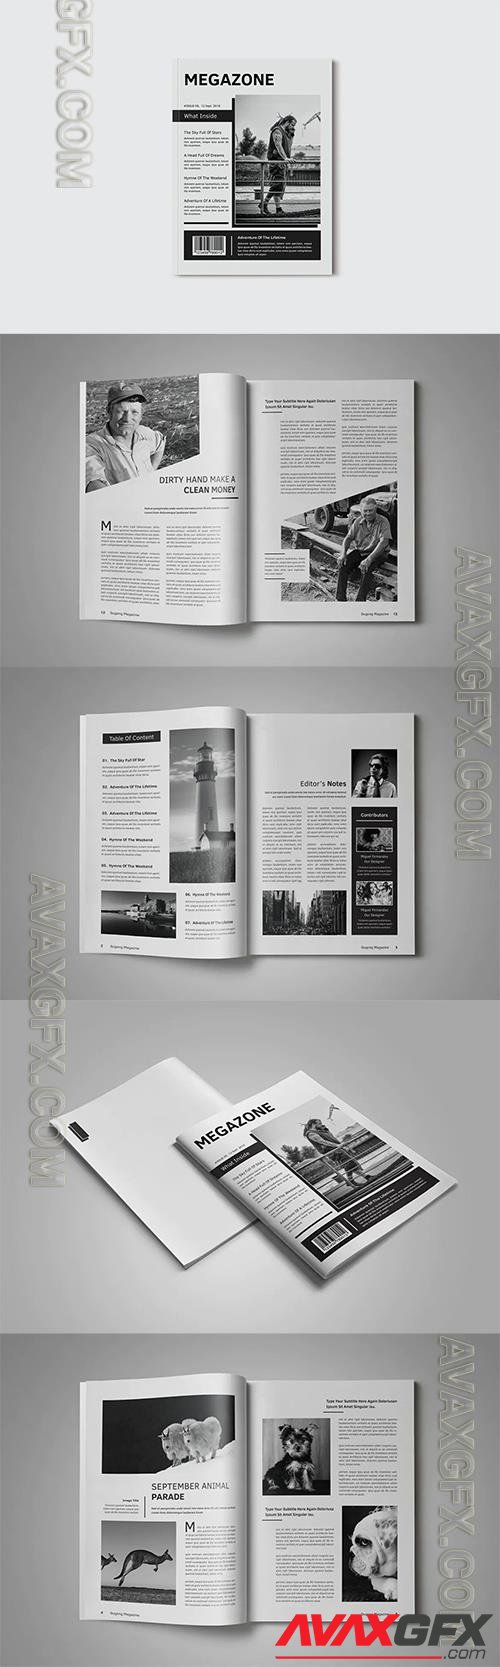 Black & White Magazine Template WS5HQRH